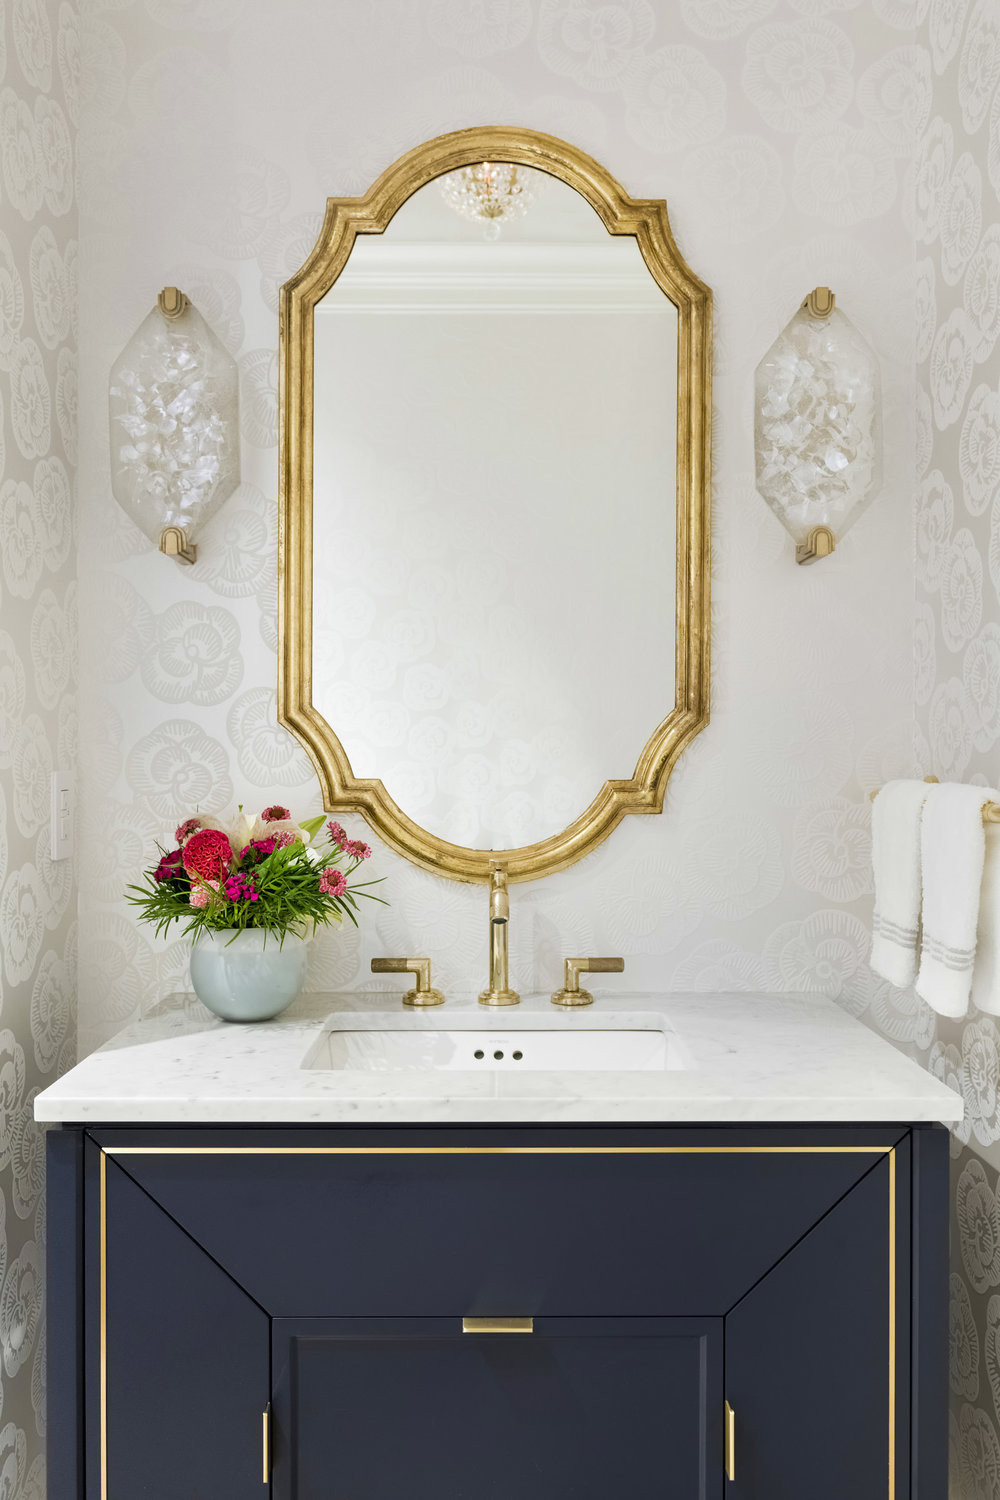 Brass Bathroom Mirror
 21 Brass Bathroom Fixtures You Probably Need